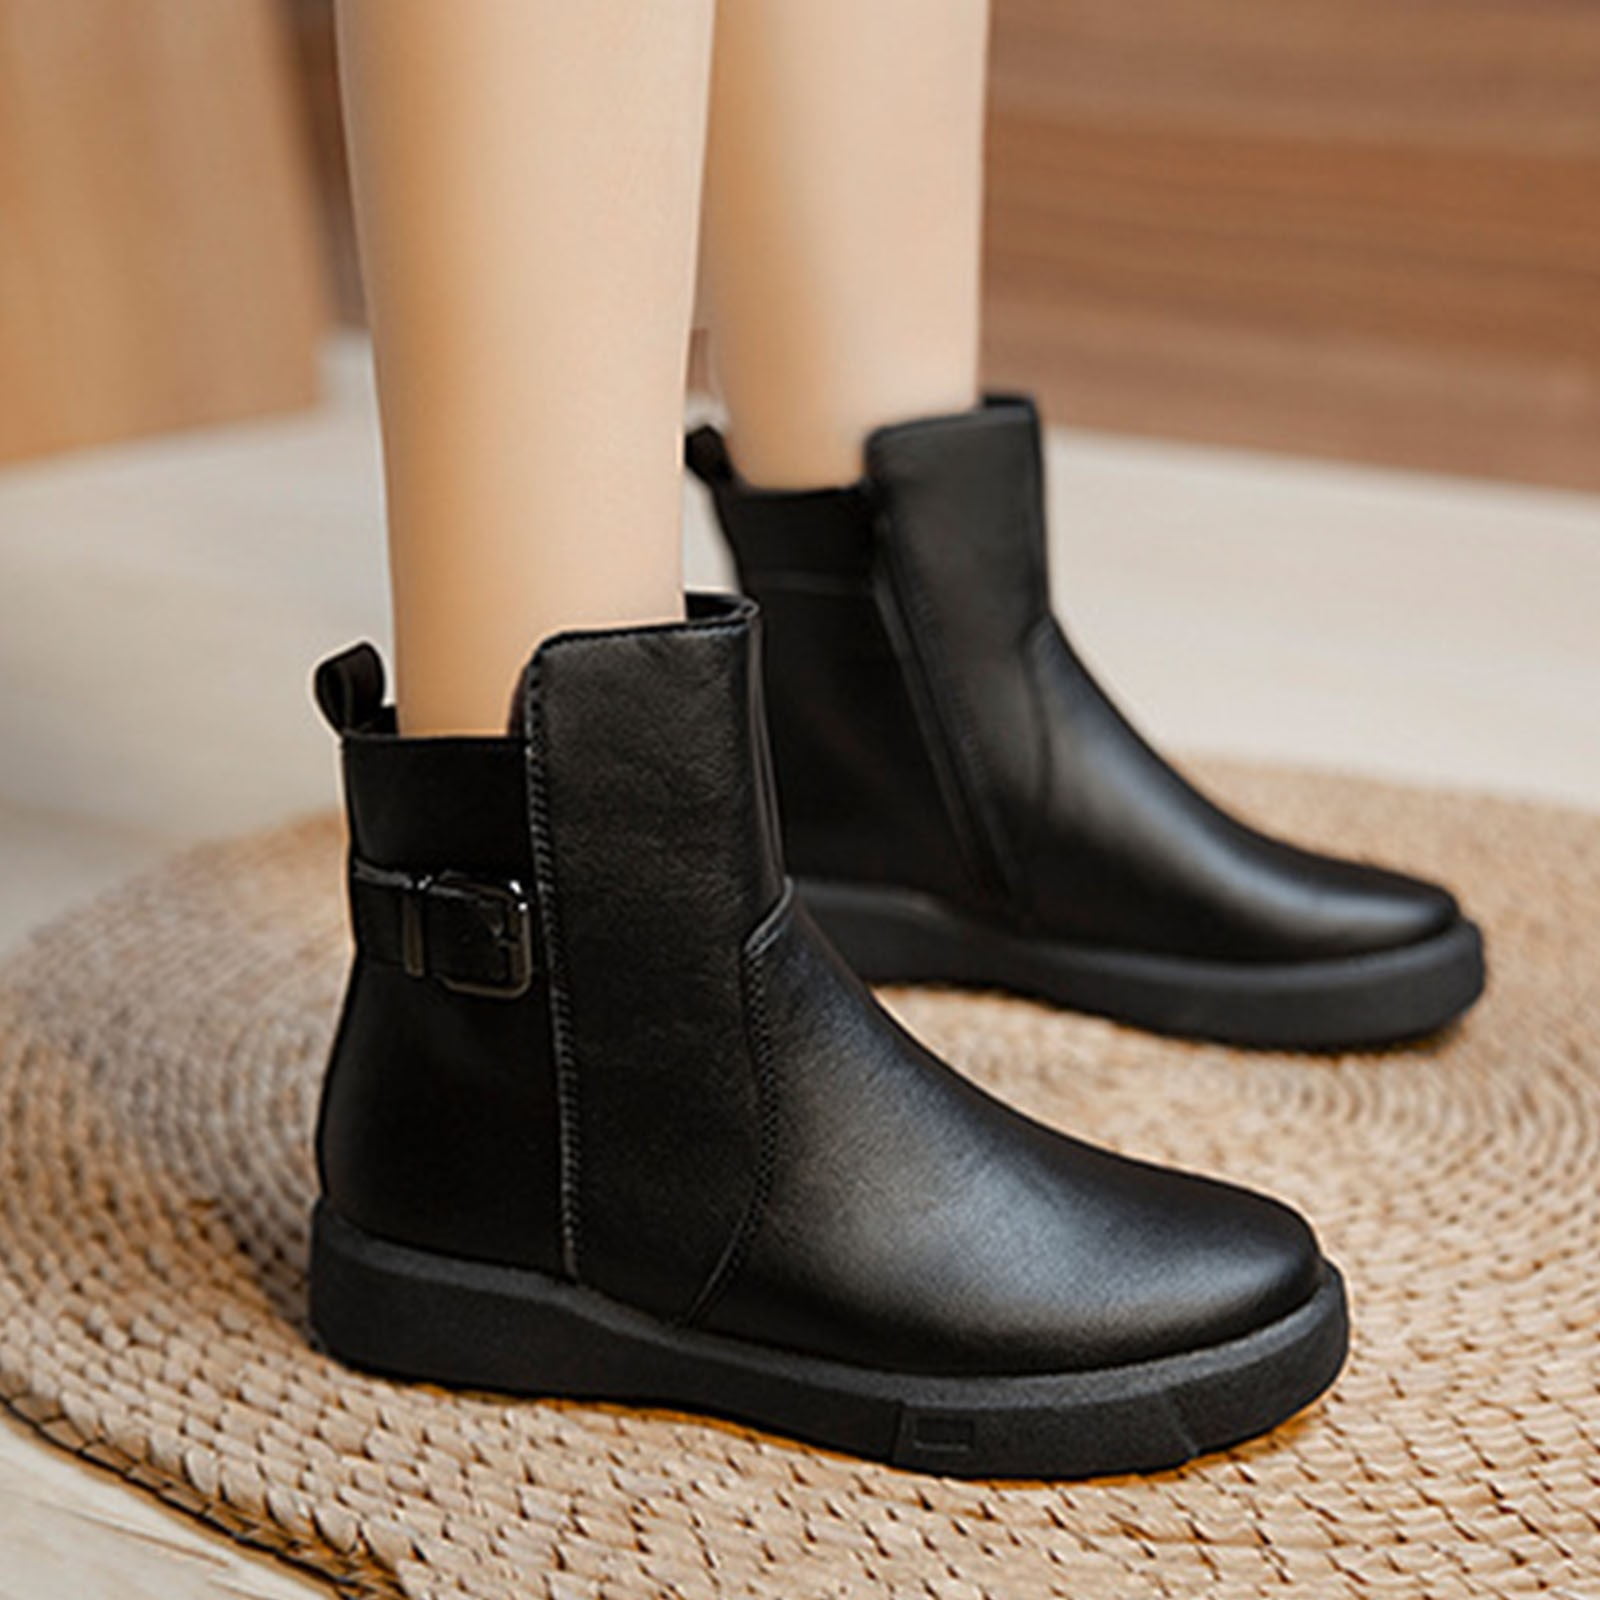 Boots Deals Women's Ankle Boots Chelsea Boots Chunky Heel Platform Low Casual Outdoor Indoor Slip Resistant Zipper Shoes,Black,6.5 -